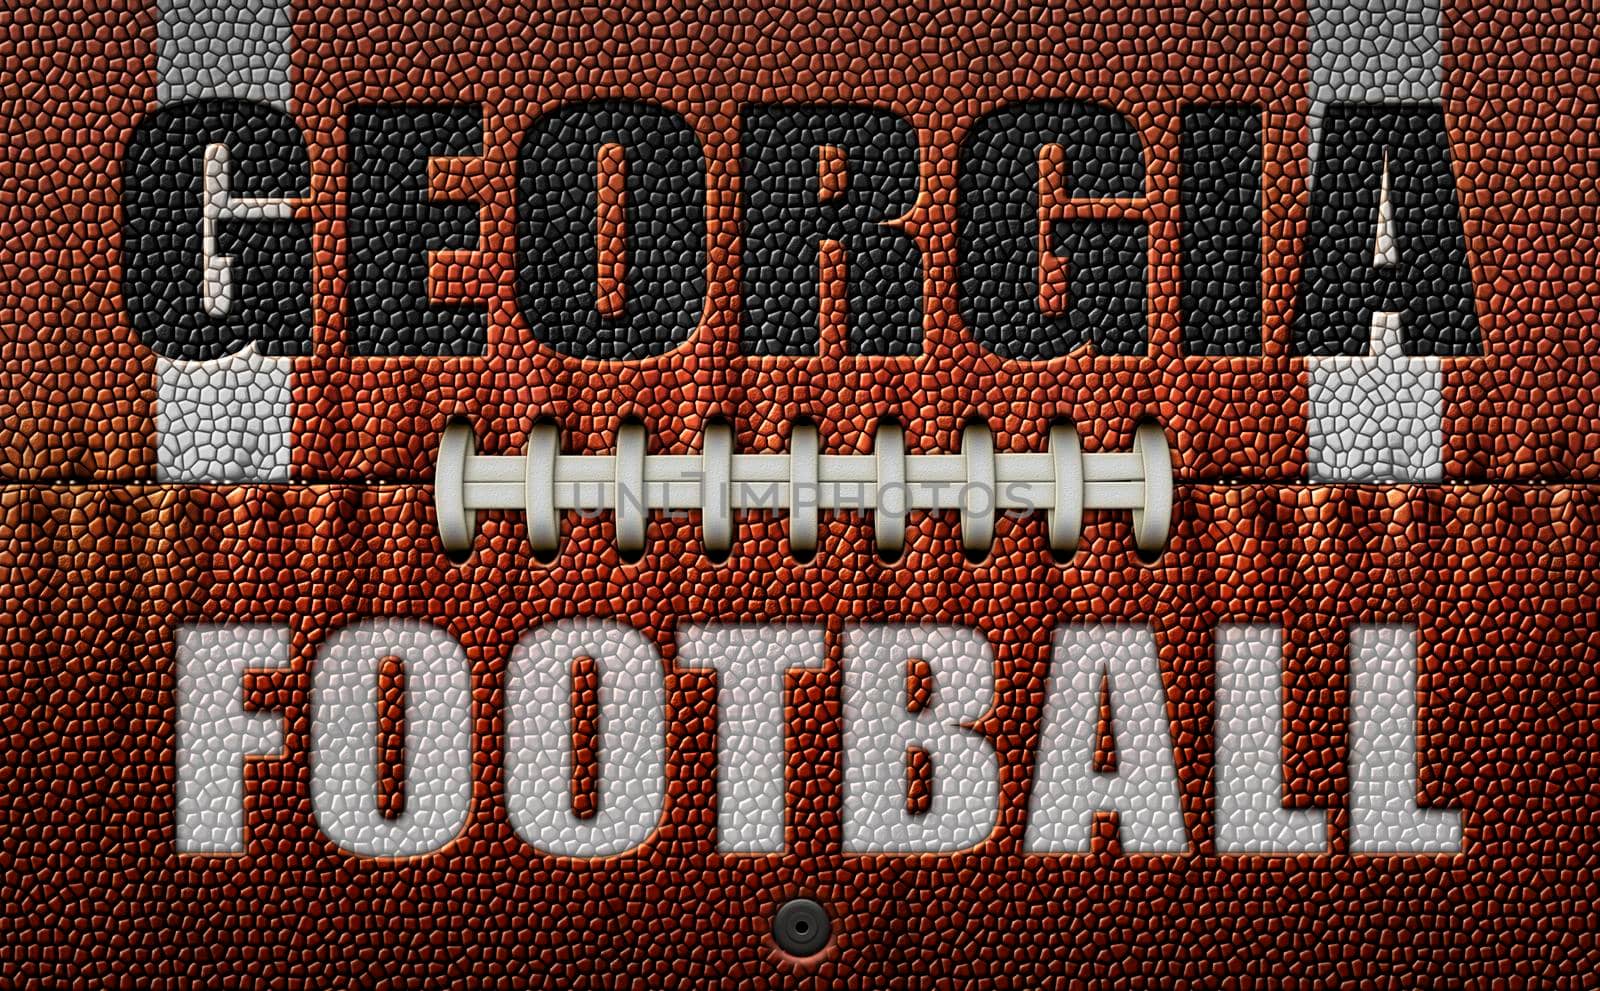 Georgia Football Text on a Flattened Football by jimlarkin